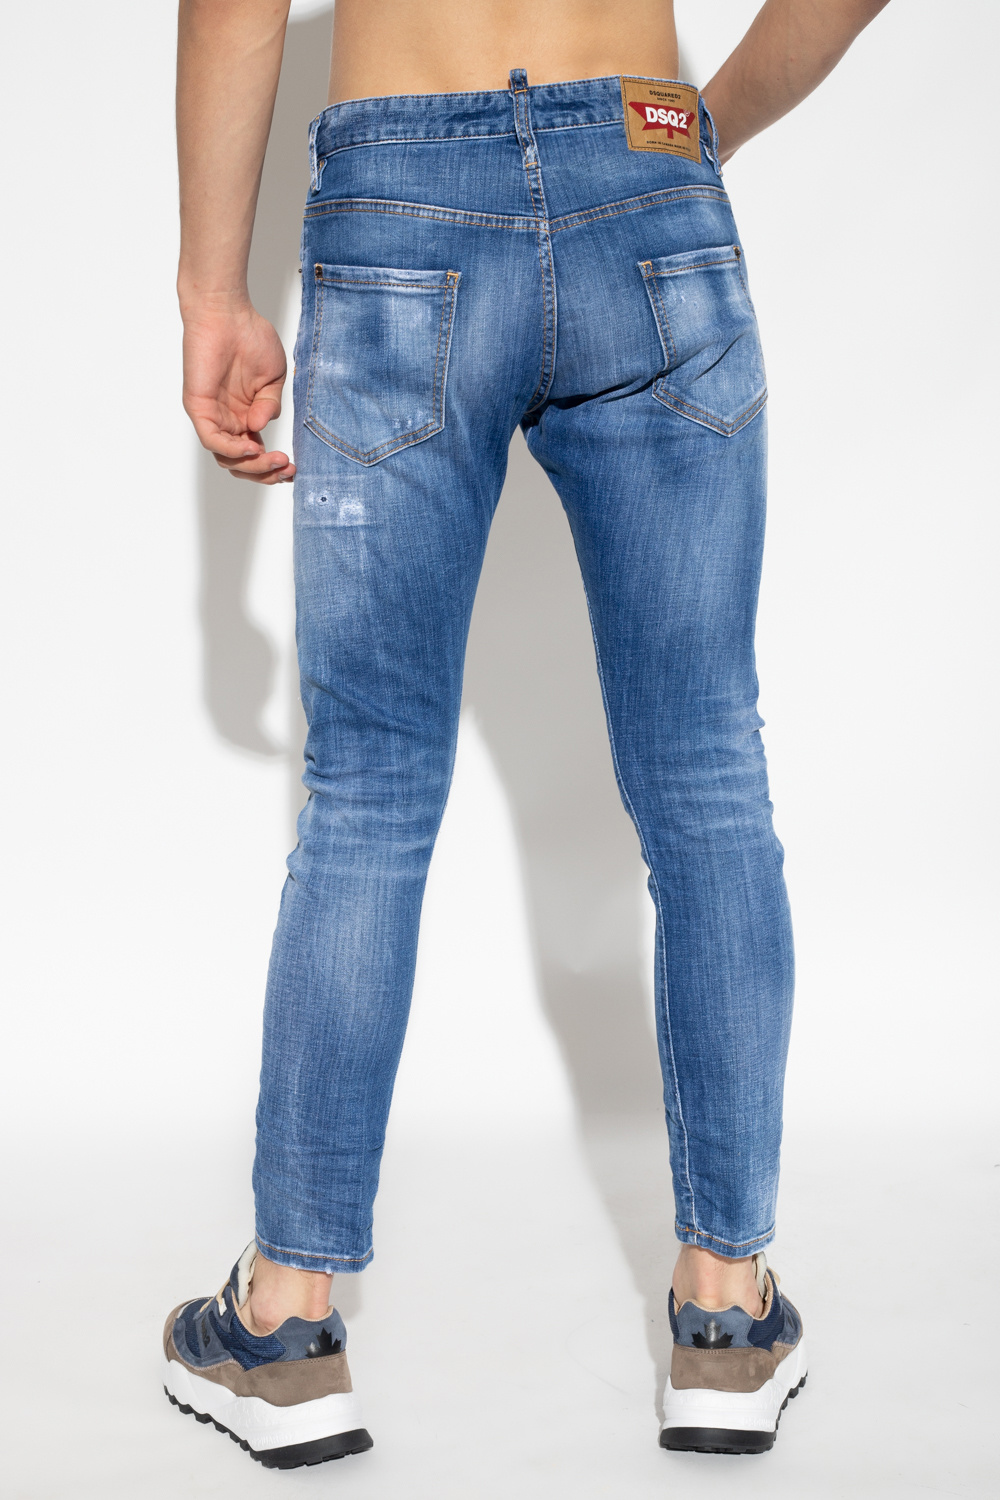 Dsquared2 ‘Sexy Twist’ jeans